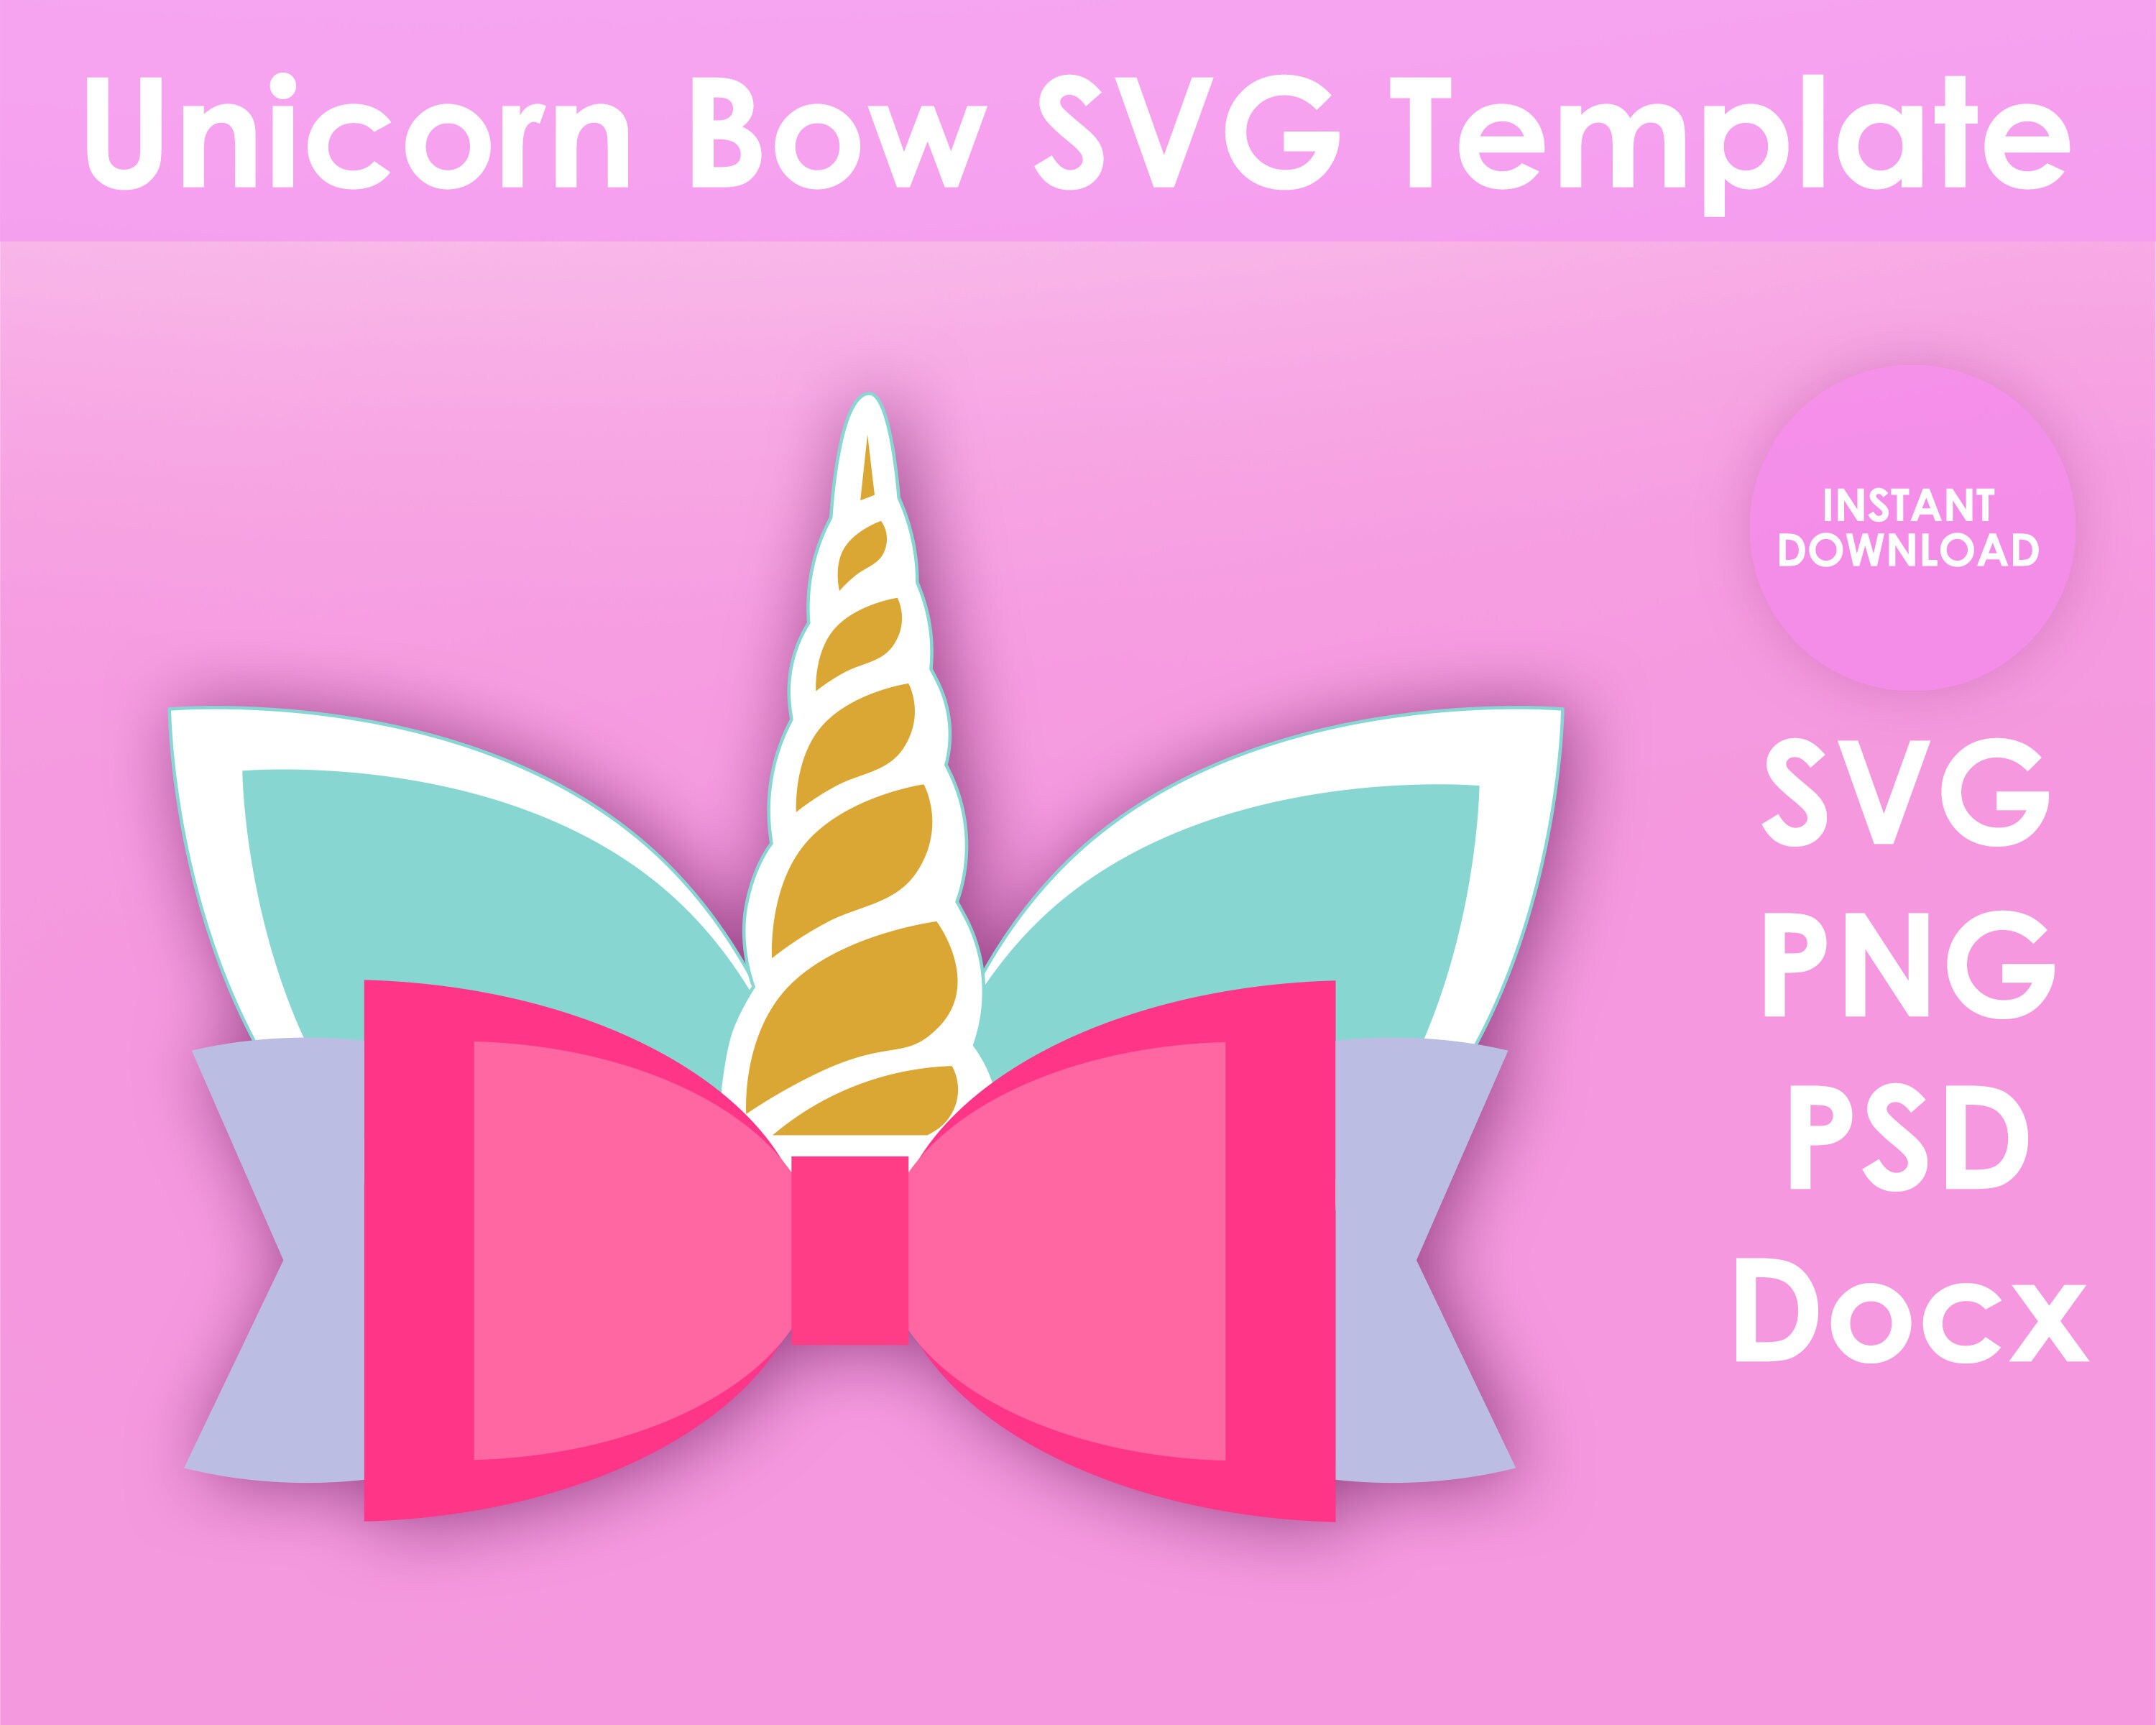 Unicorn Bow Template SVG PNG PSD e DOCx 8.5x11 Sheet - Etsy Italia